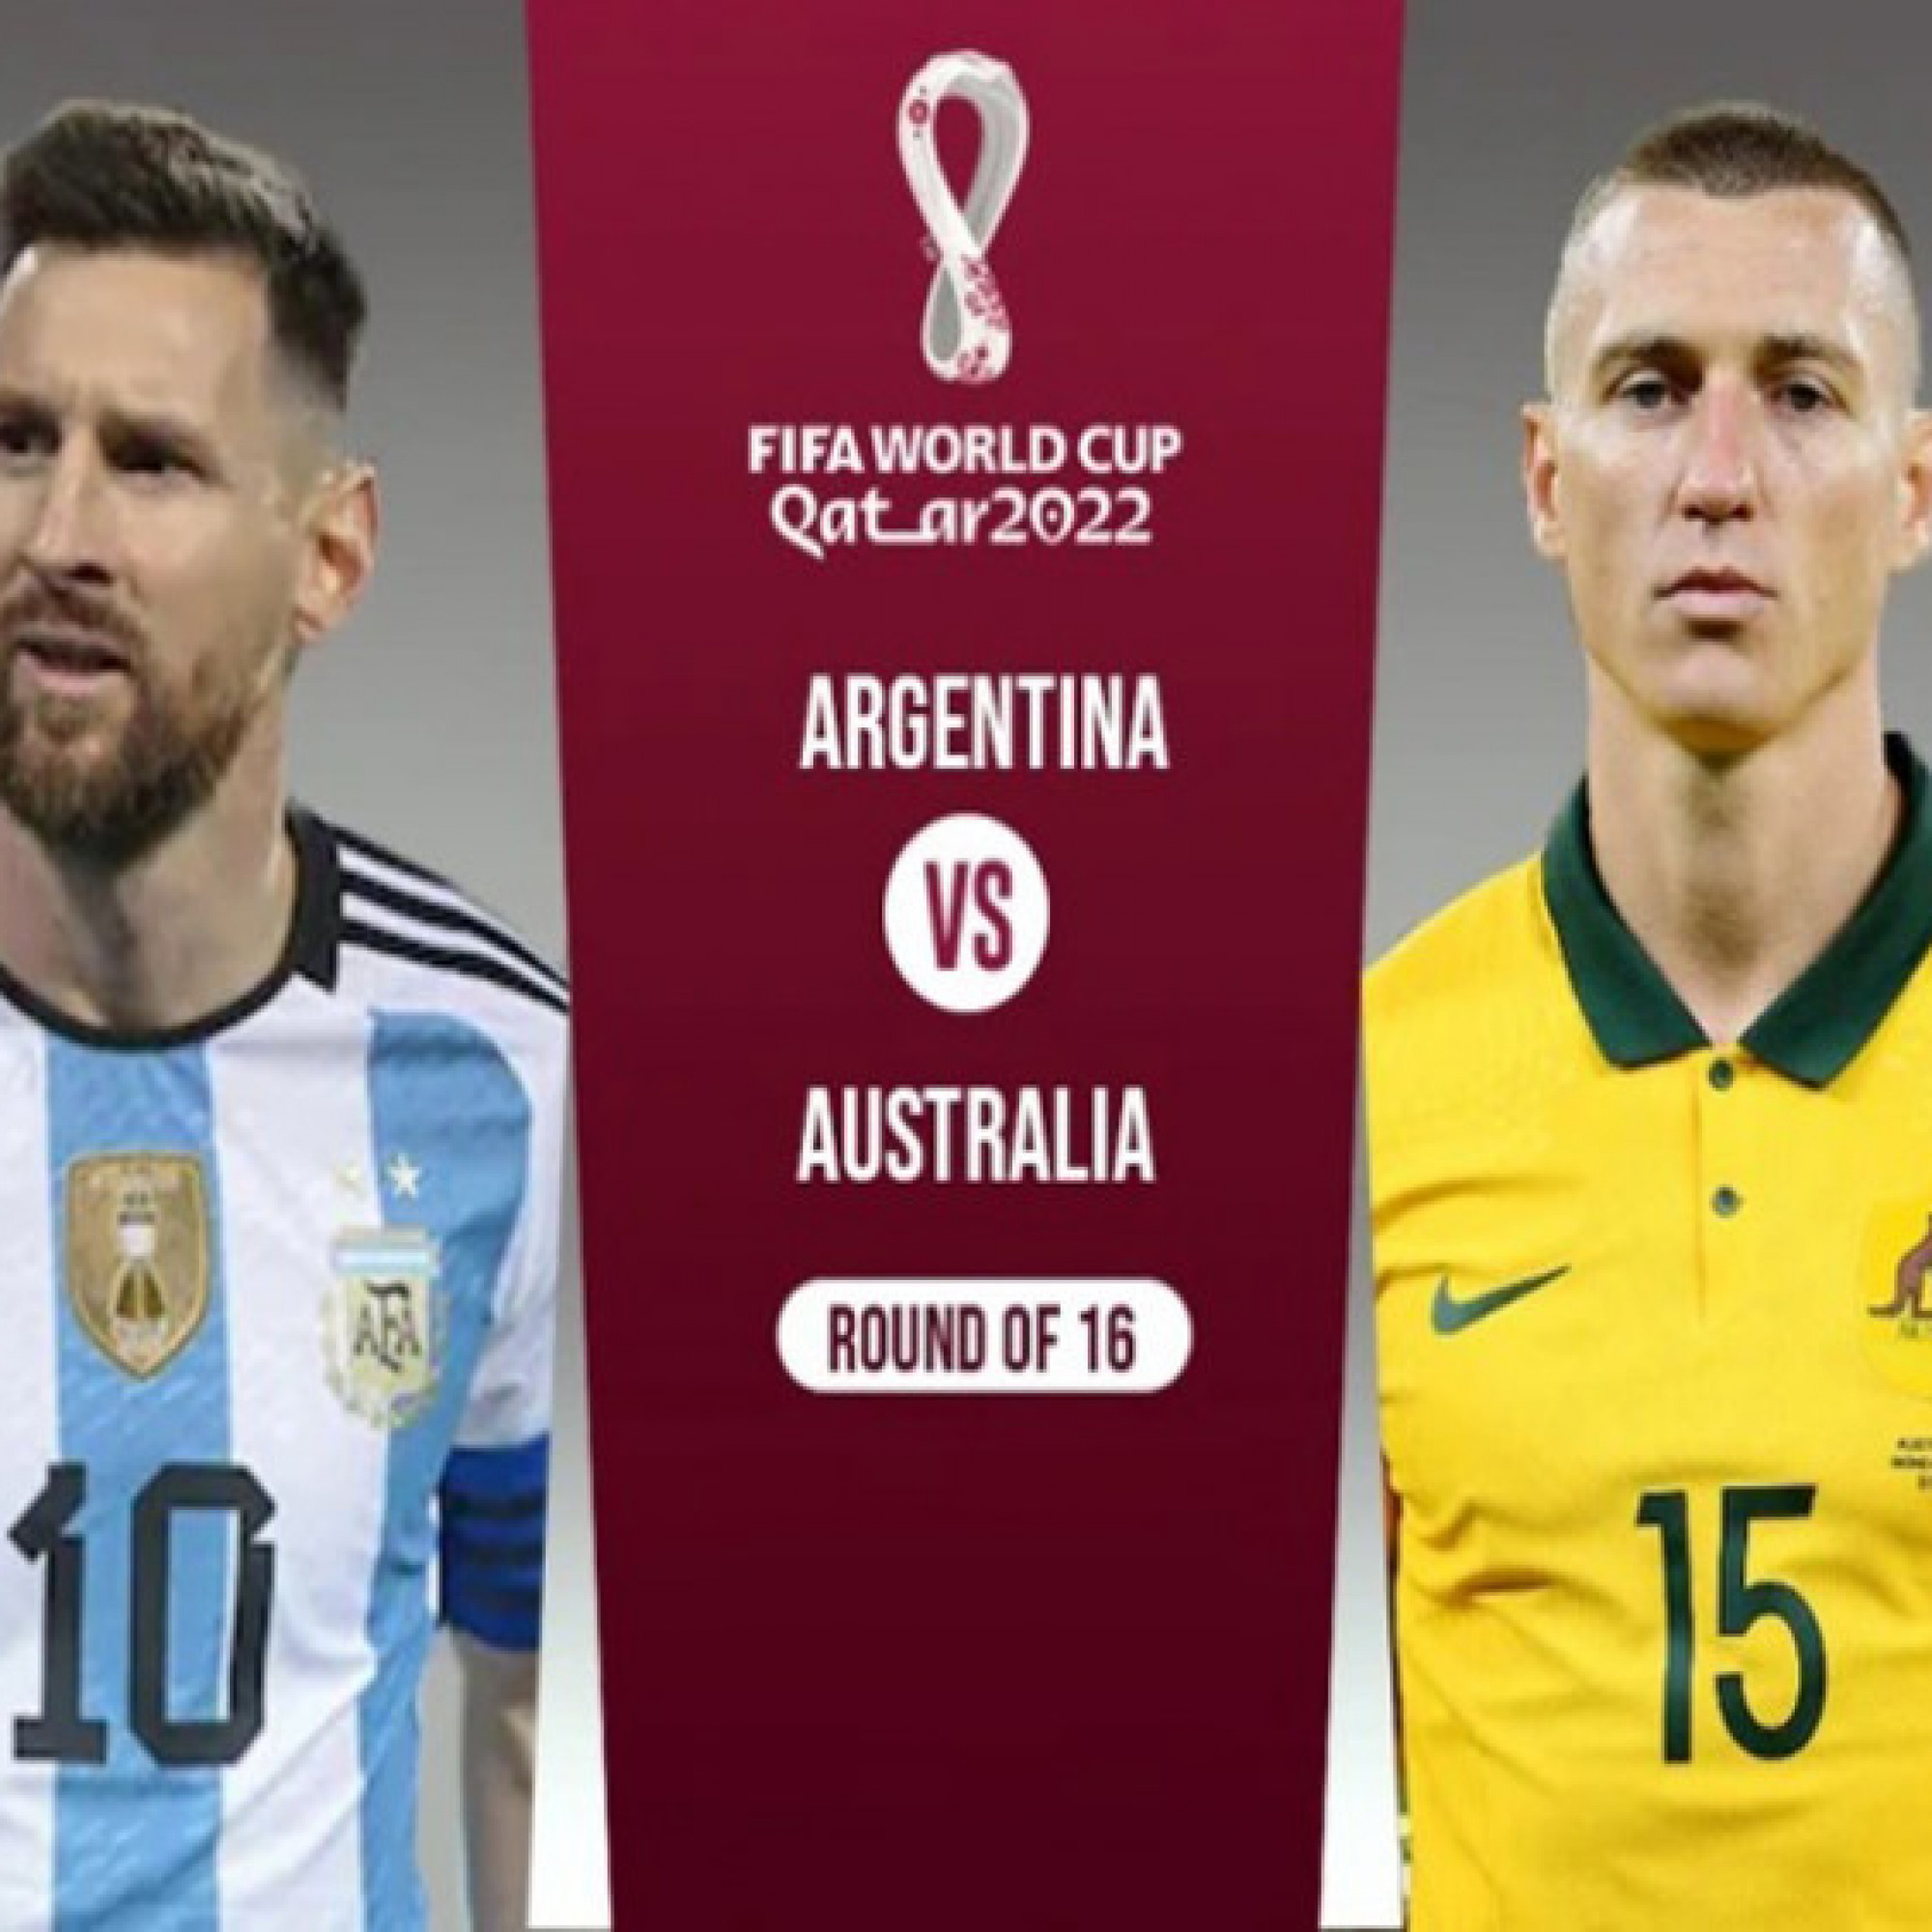  - Trực tiếp bóng đá Argentina - Australia: Argentina phải khiếp sợ Leckie (World Cup)